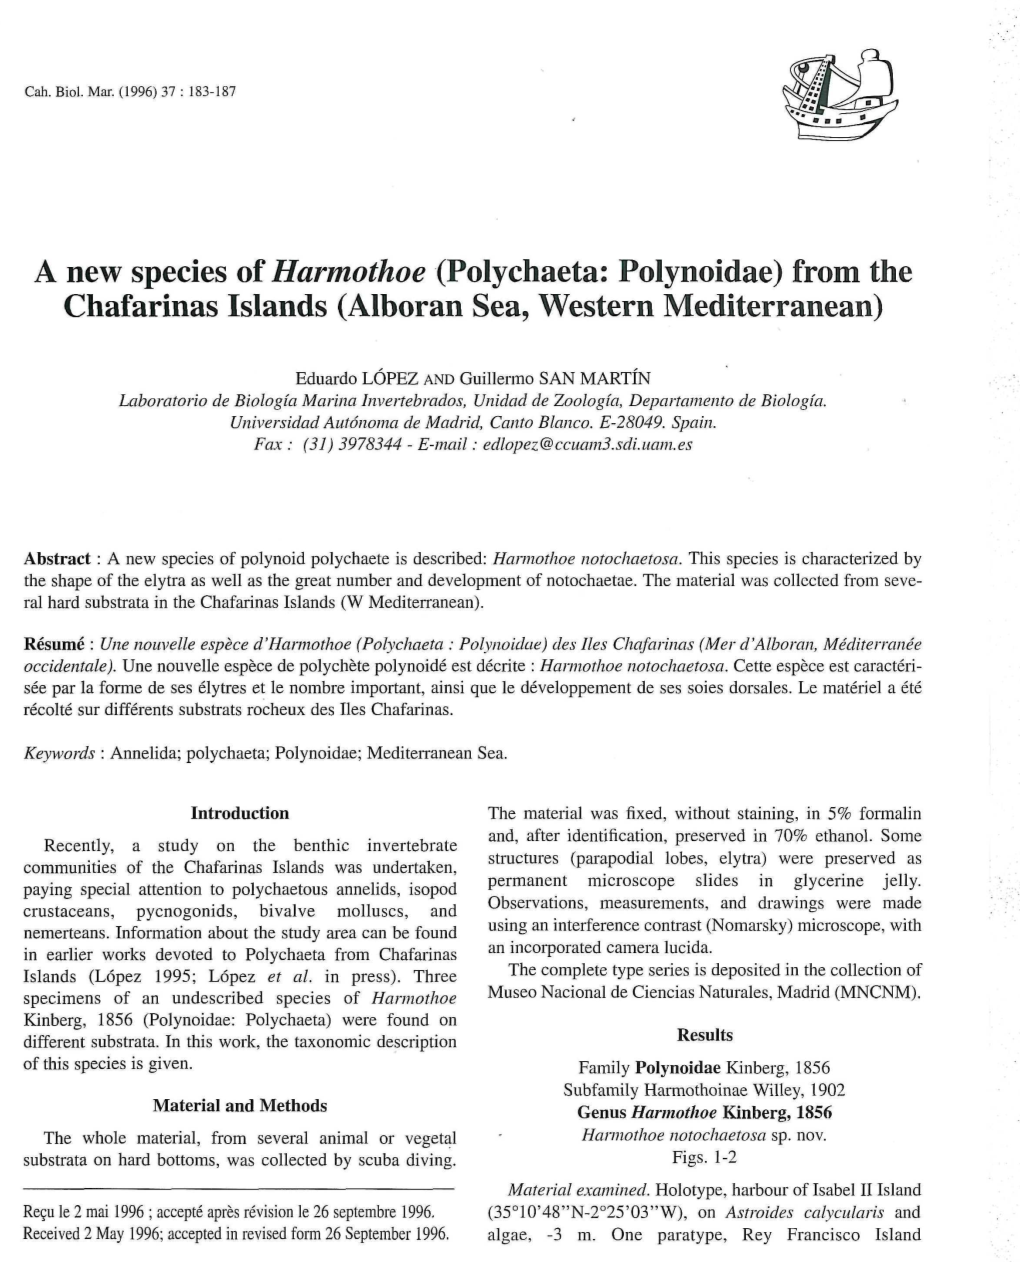 A New Species of Harmothoe (Polychaeta: Polynoidae) from the Chafarinas Islands (Alboran Sea, Western Mediterranean)